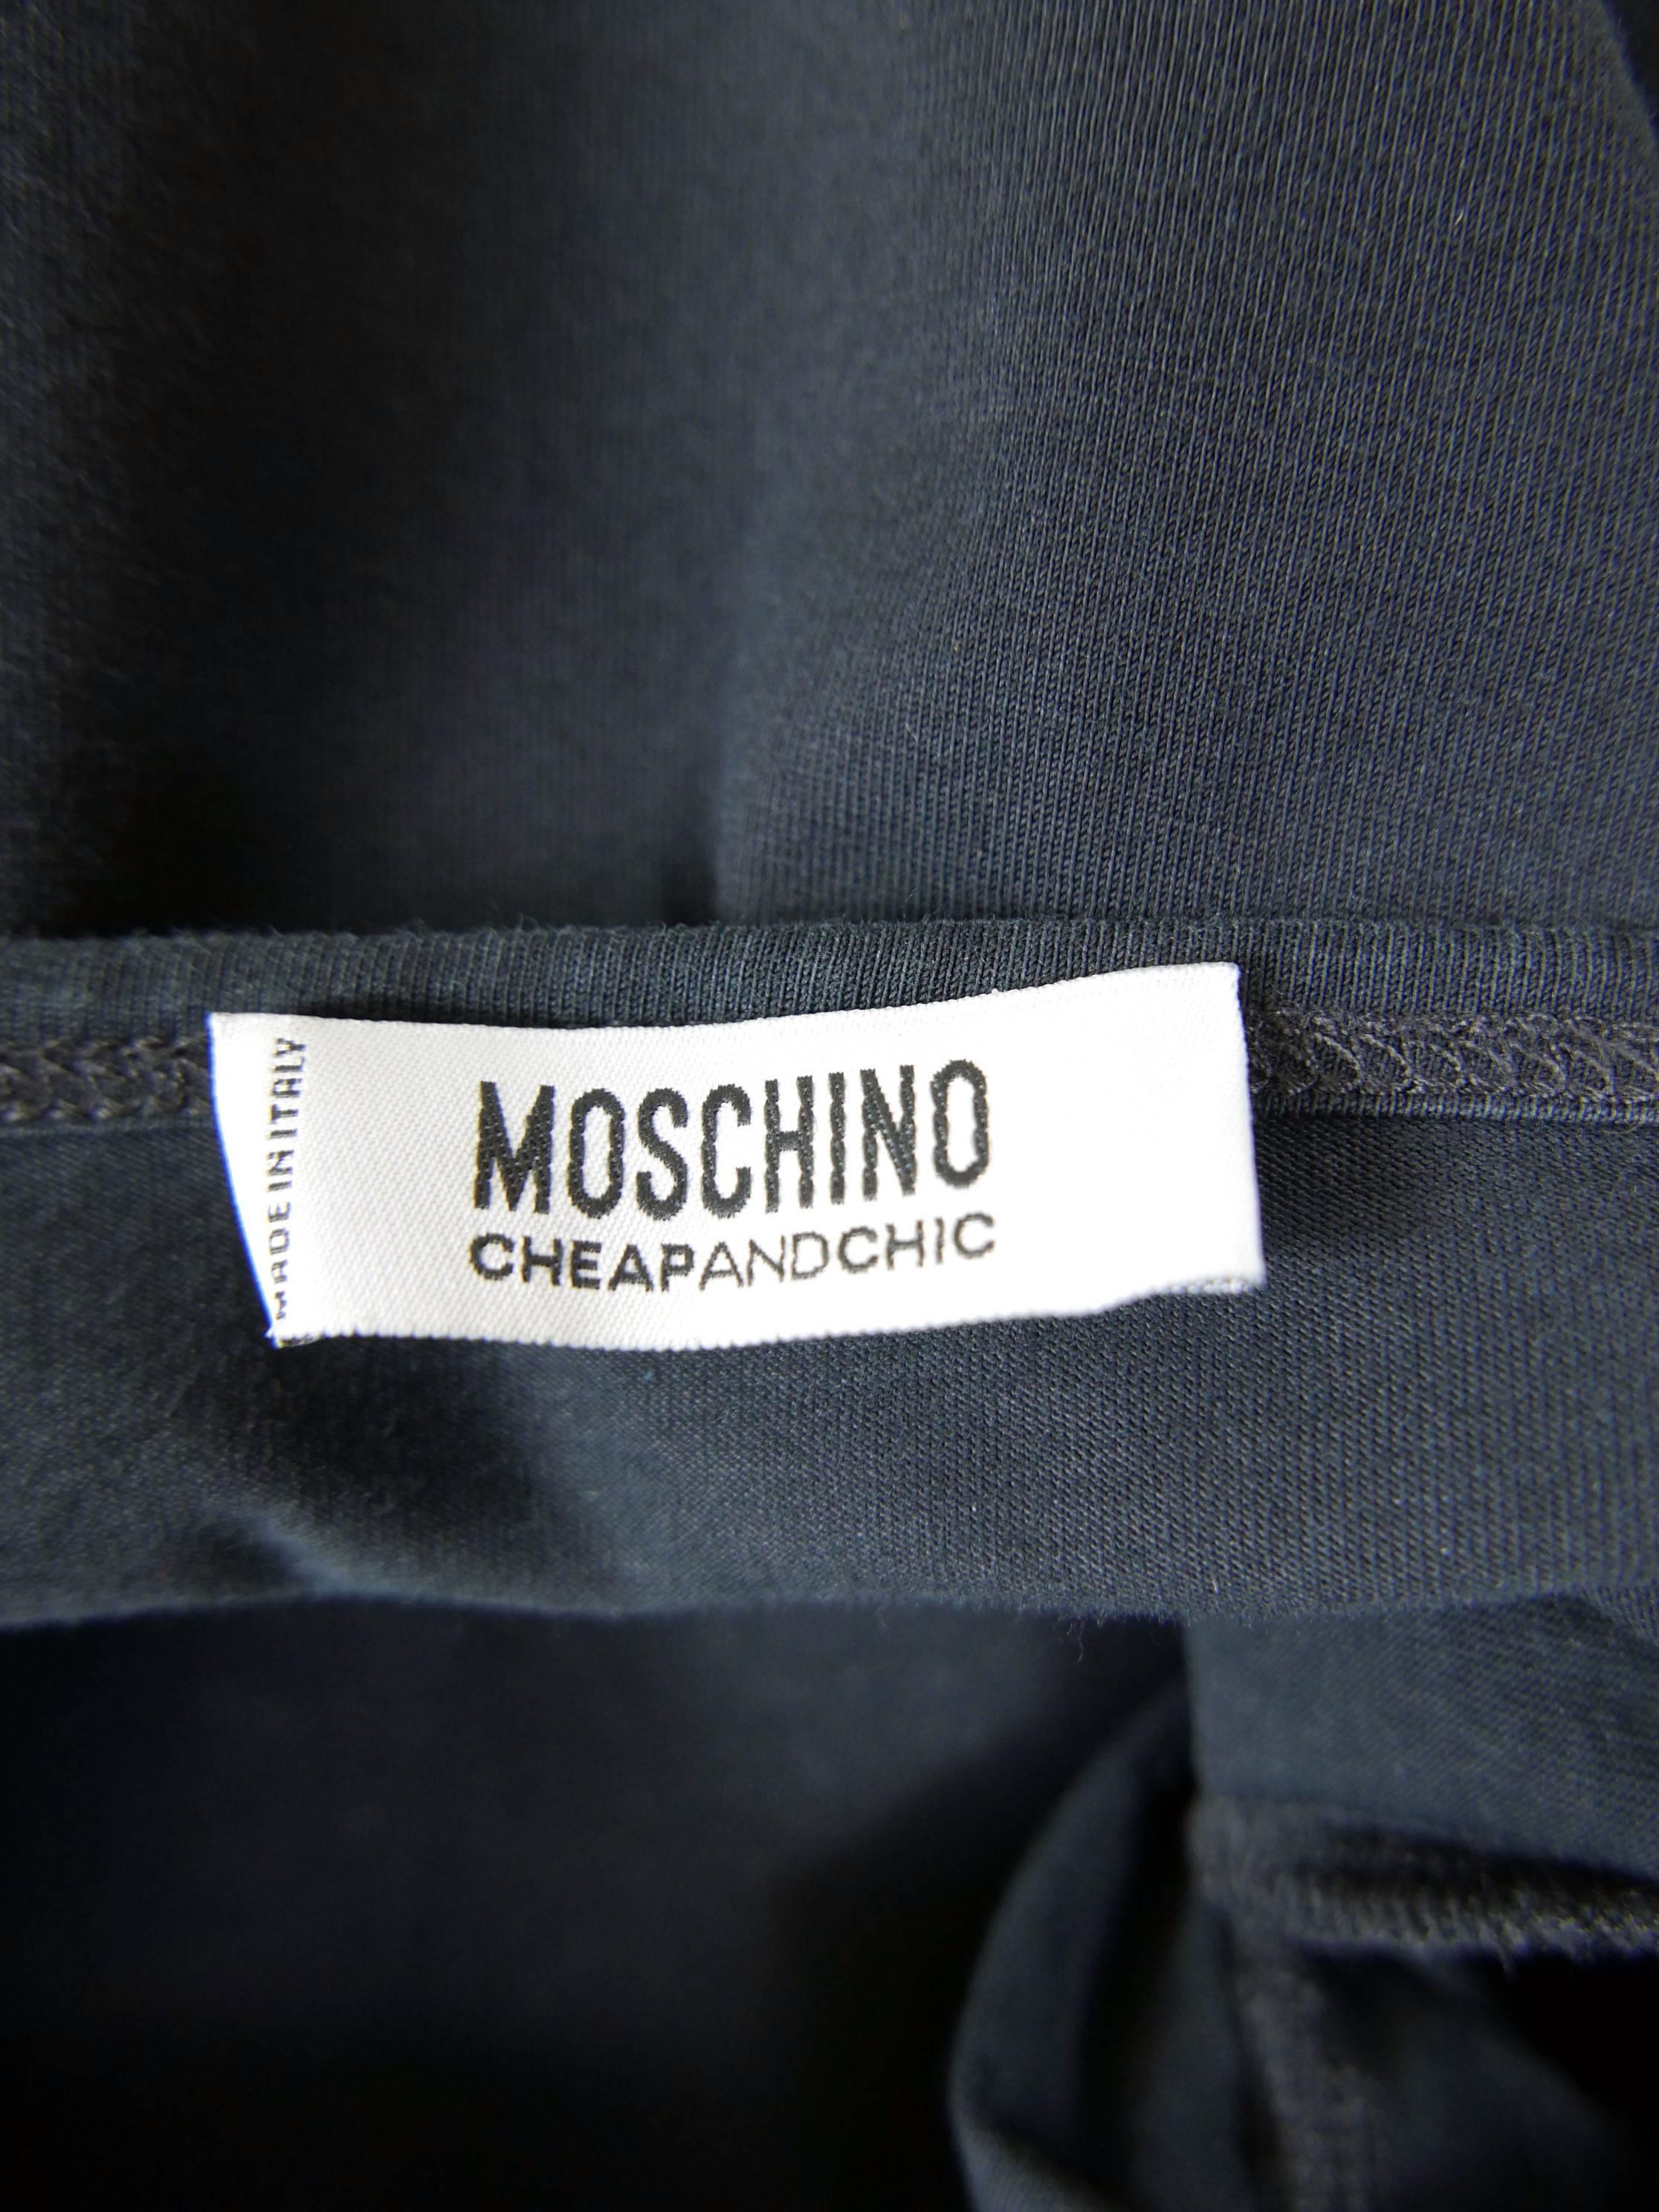 MOSCHINO Cheap and Chic Black Printed Long Sleeve T-Shirt 2